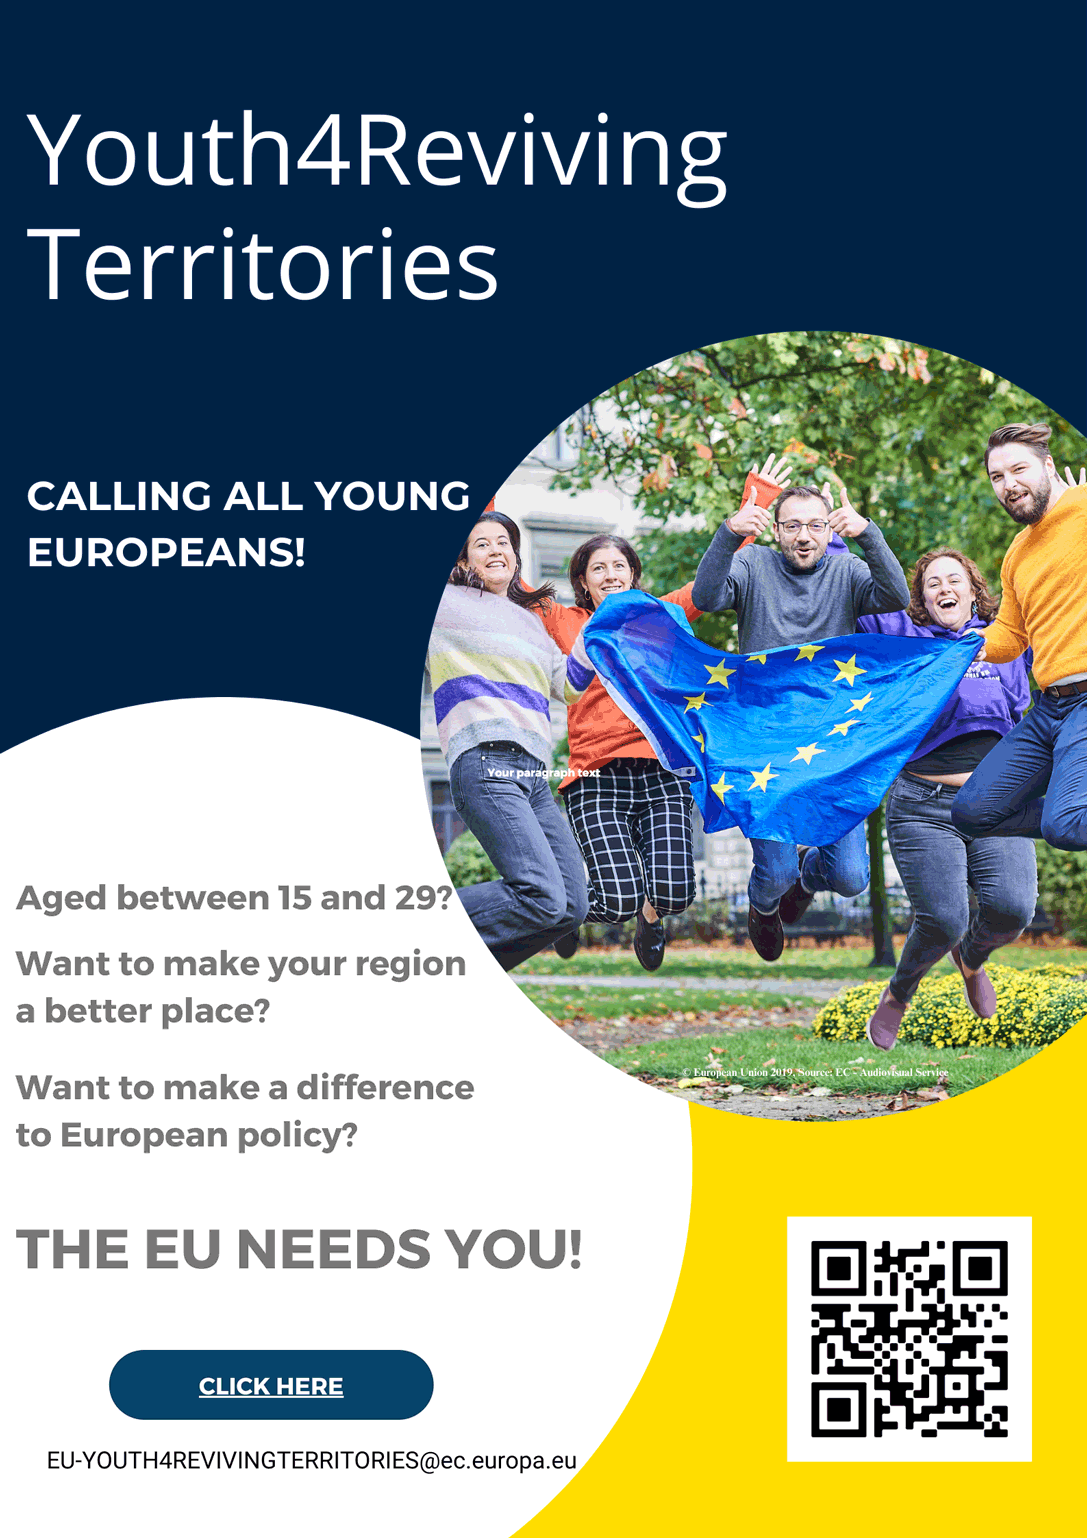 Hear ye! Hear ye! Calling all young Europeans!